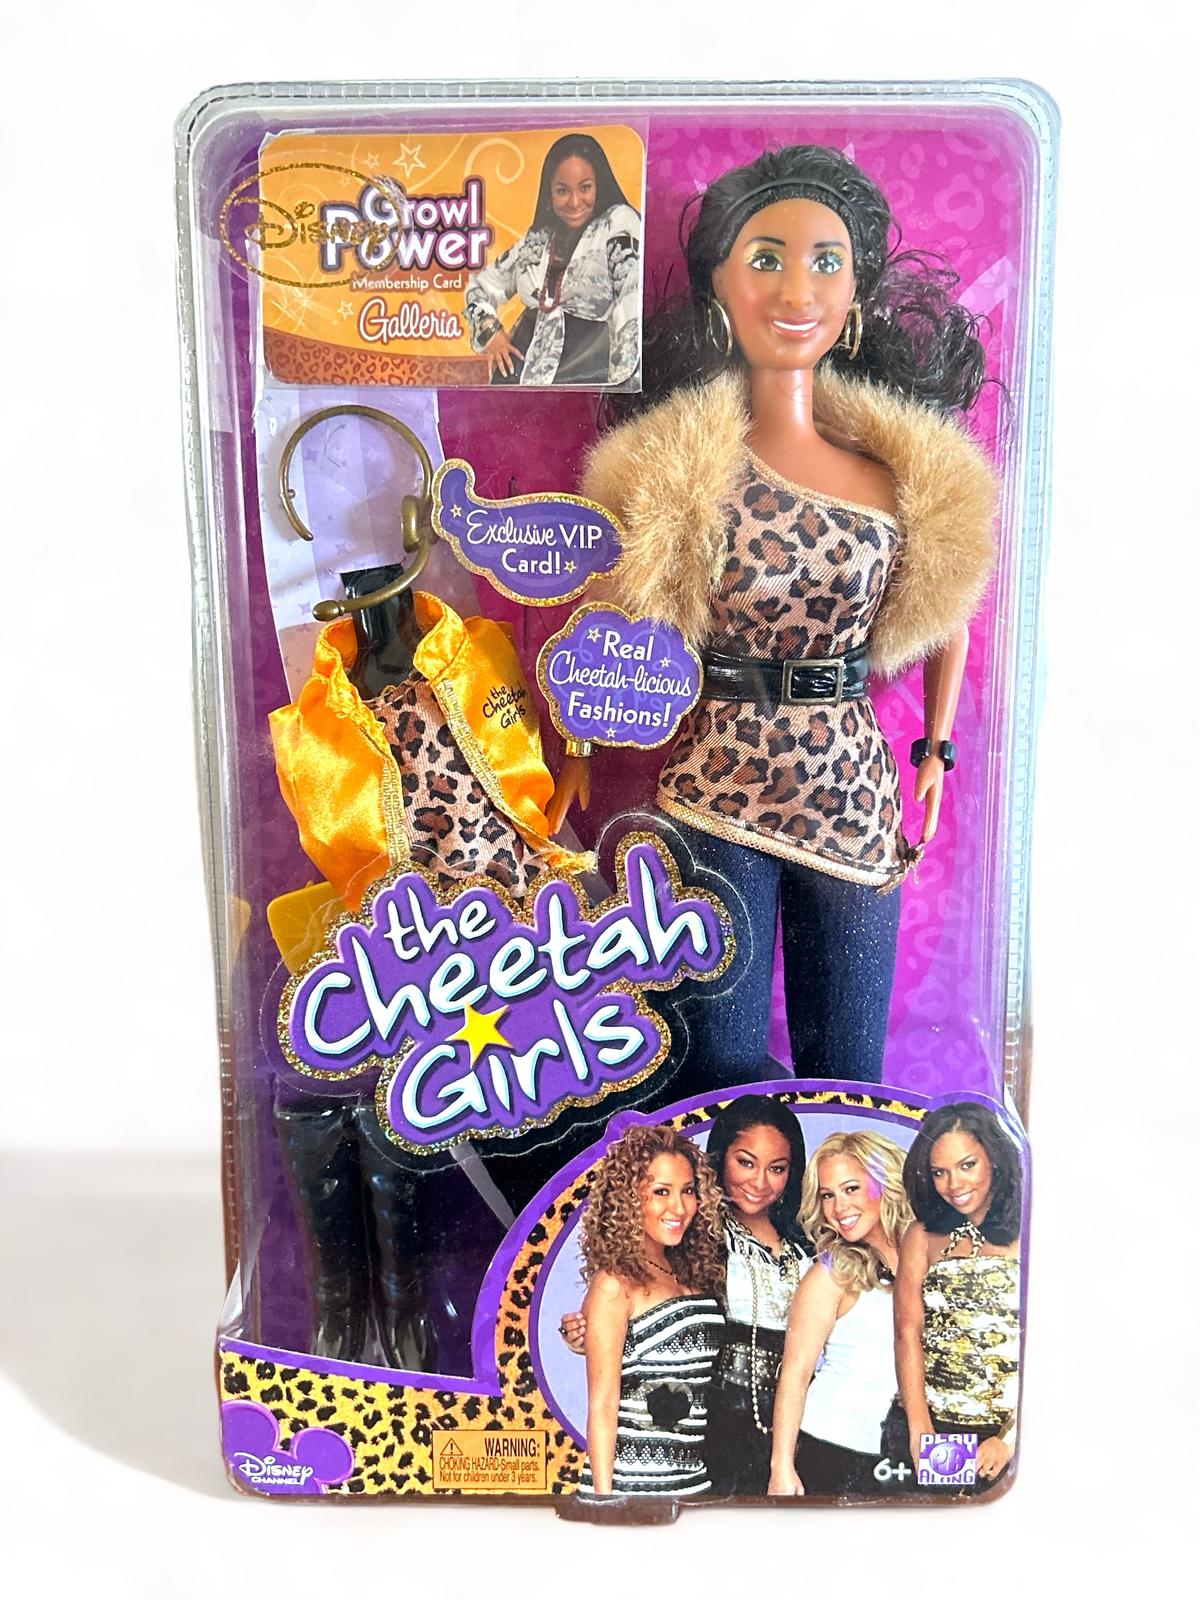 The Cheetah Girls - 'Galleria'